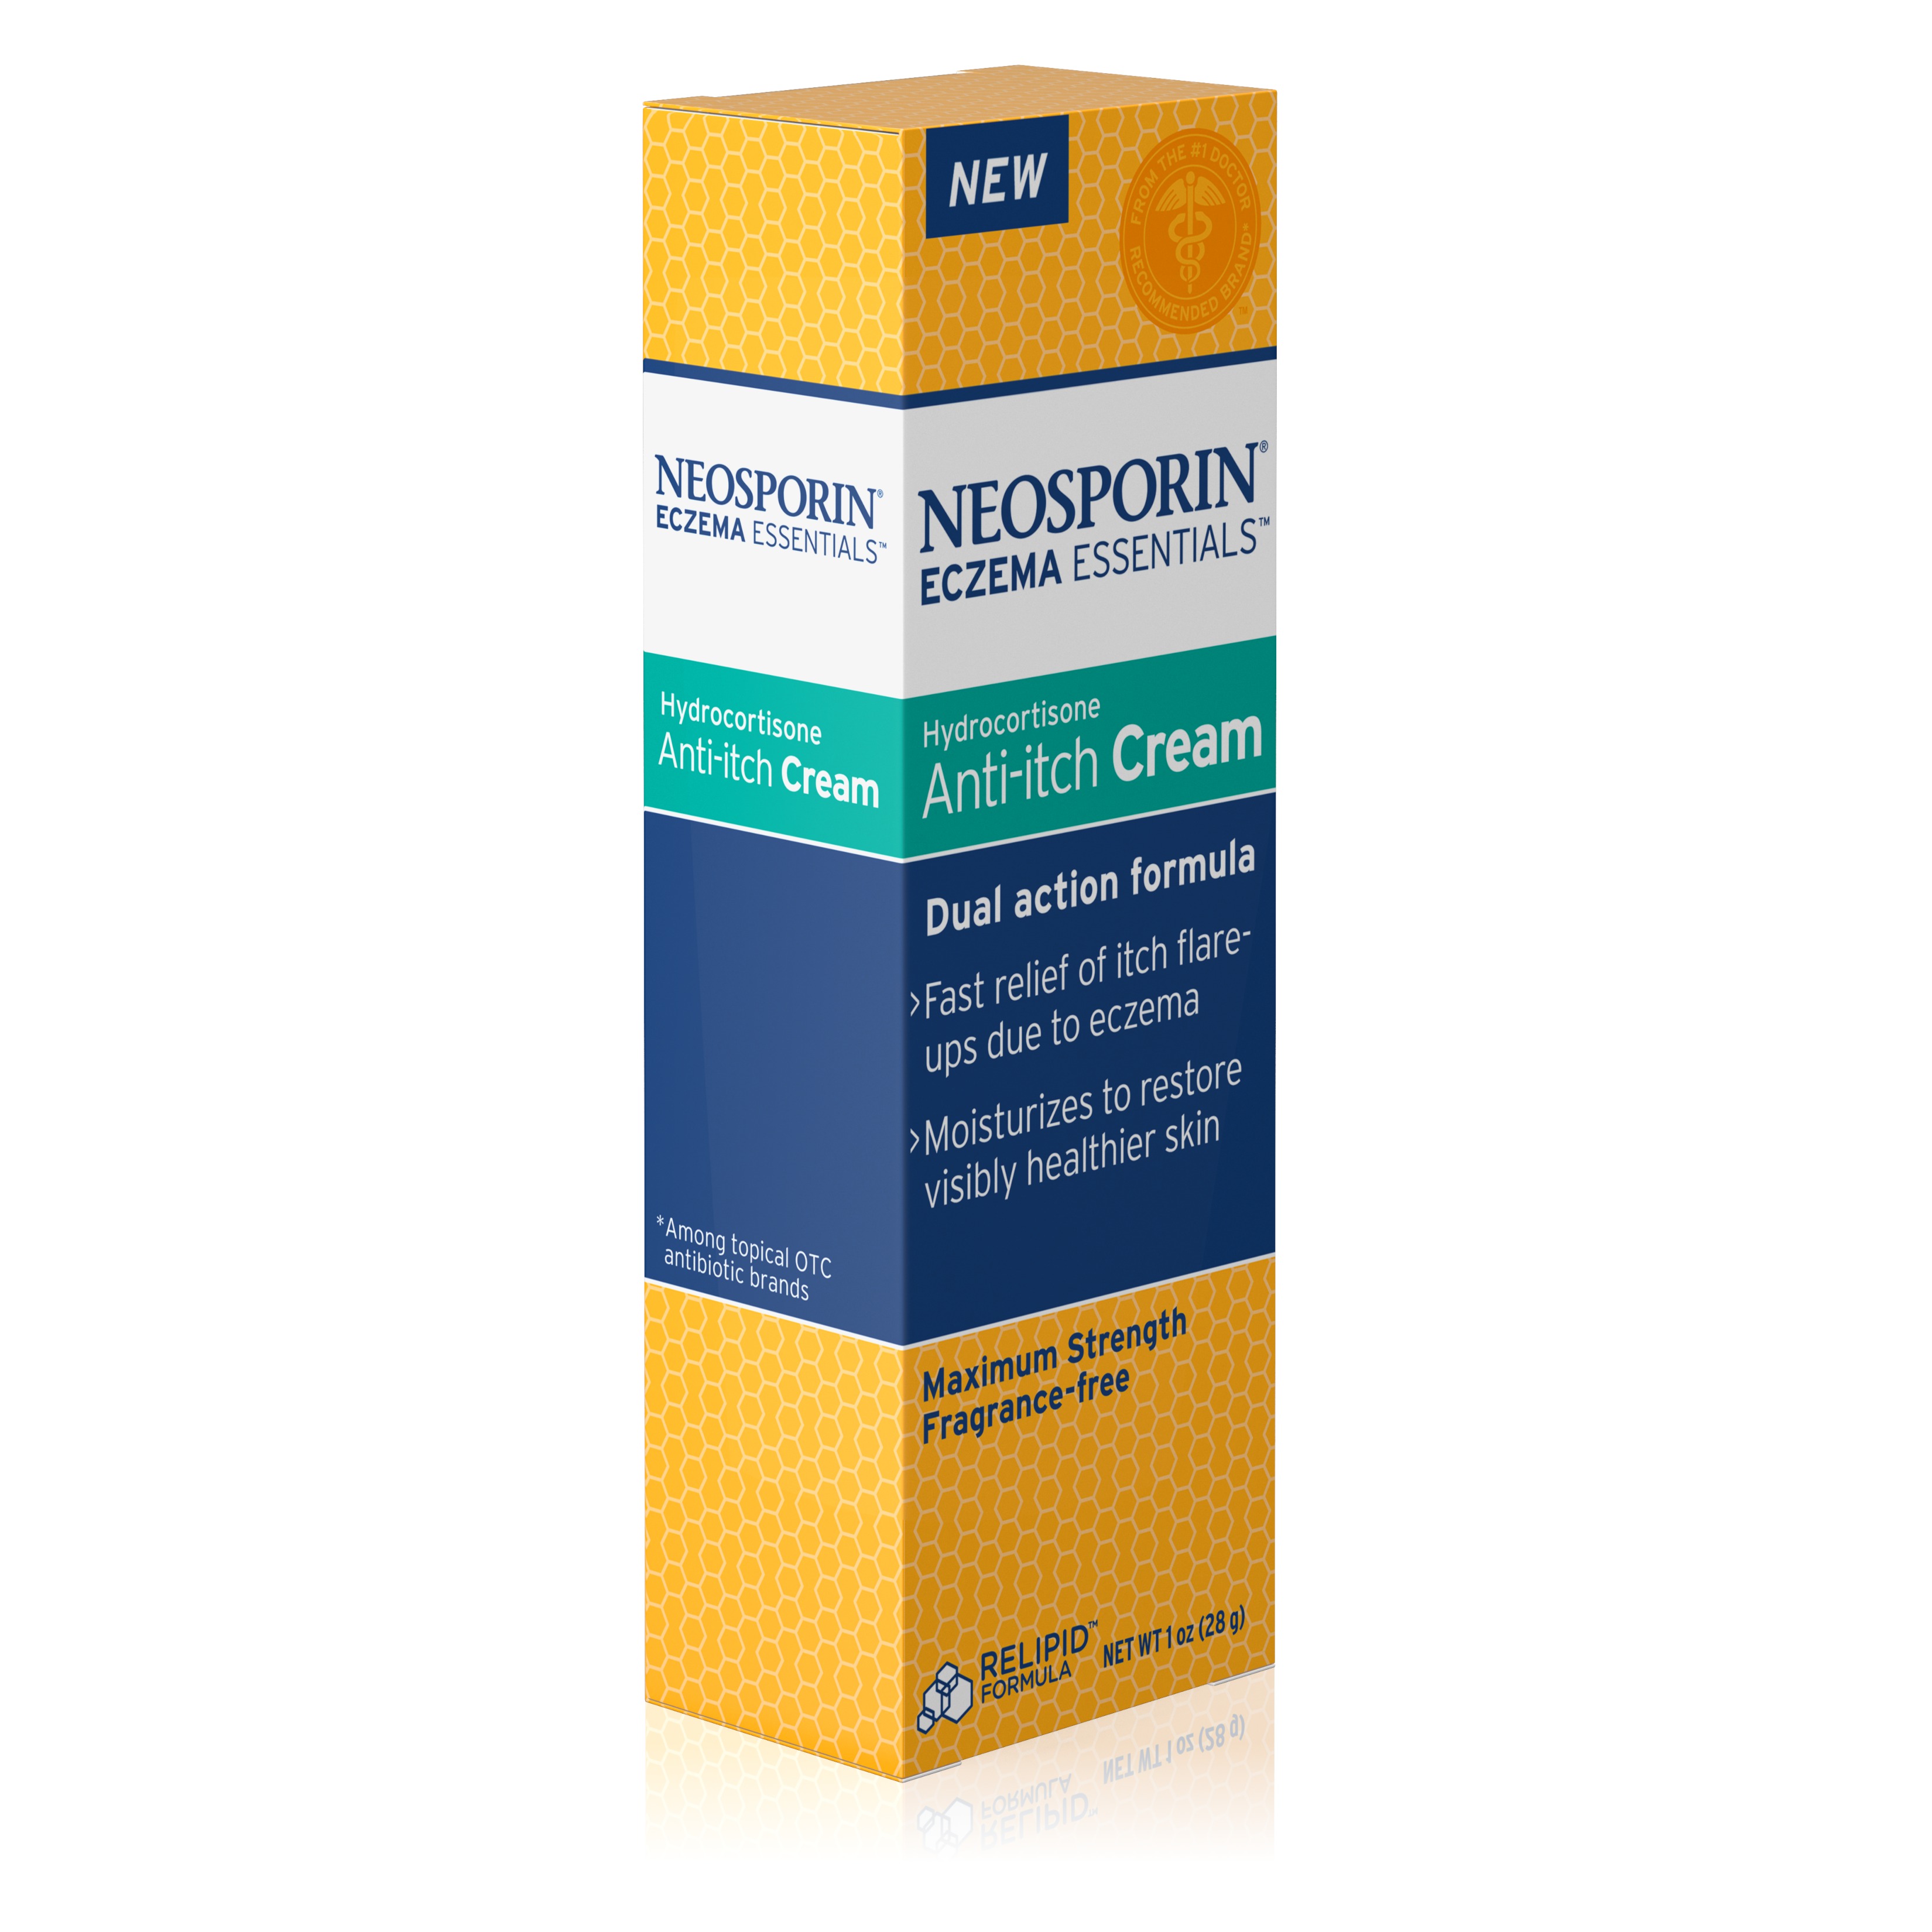 Neosporin Eczema Essentials Hydrocortisone Anti-Itch Cream, 1 Oz - image 2 of 6